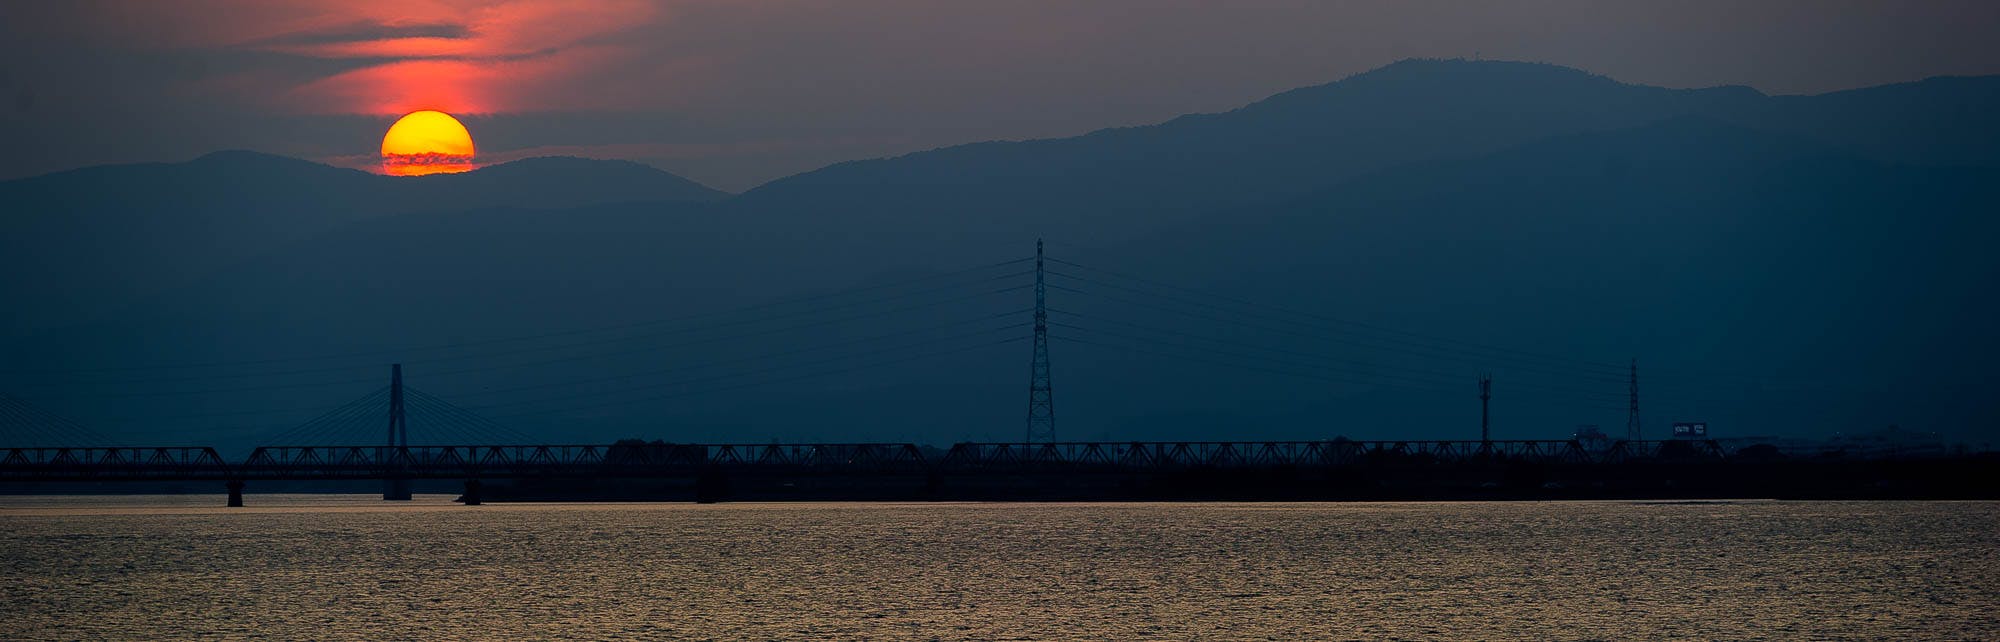 Sunset over the Yoshino River in Tokushima